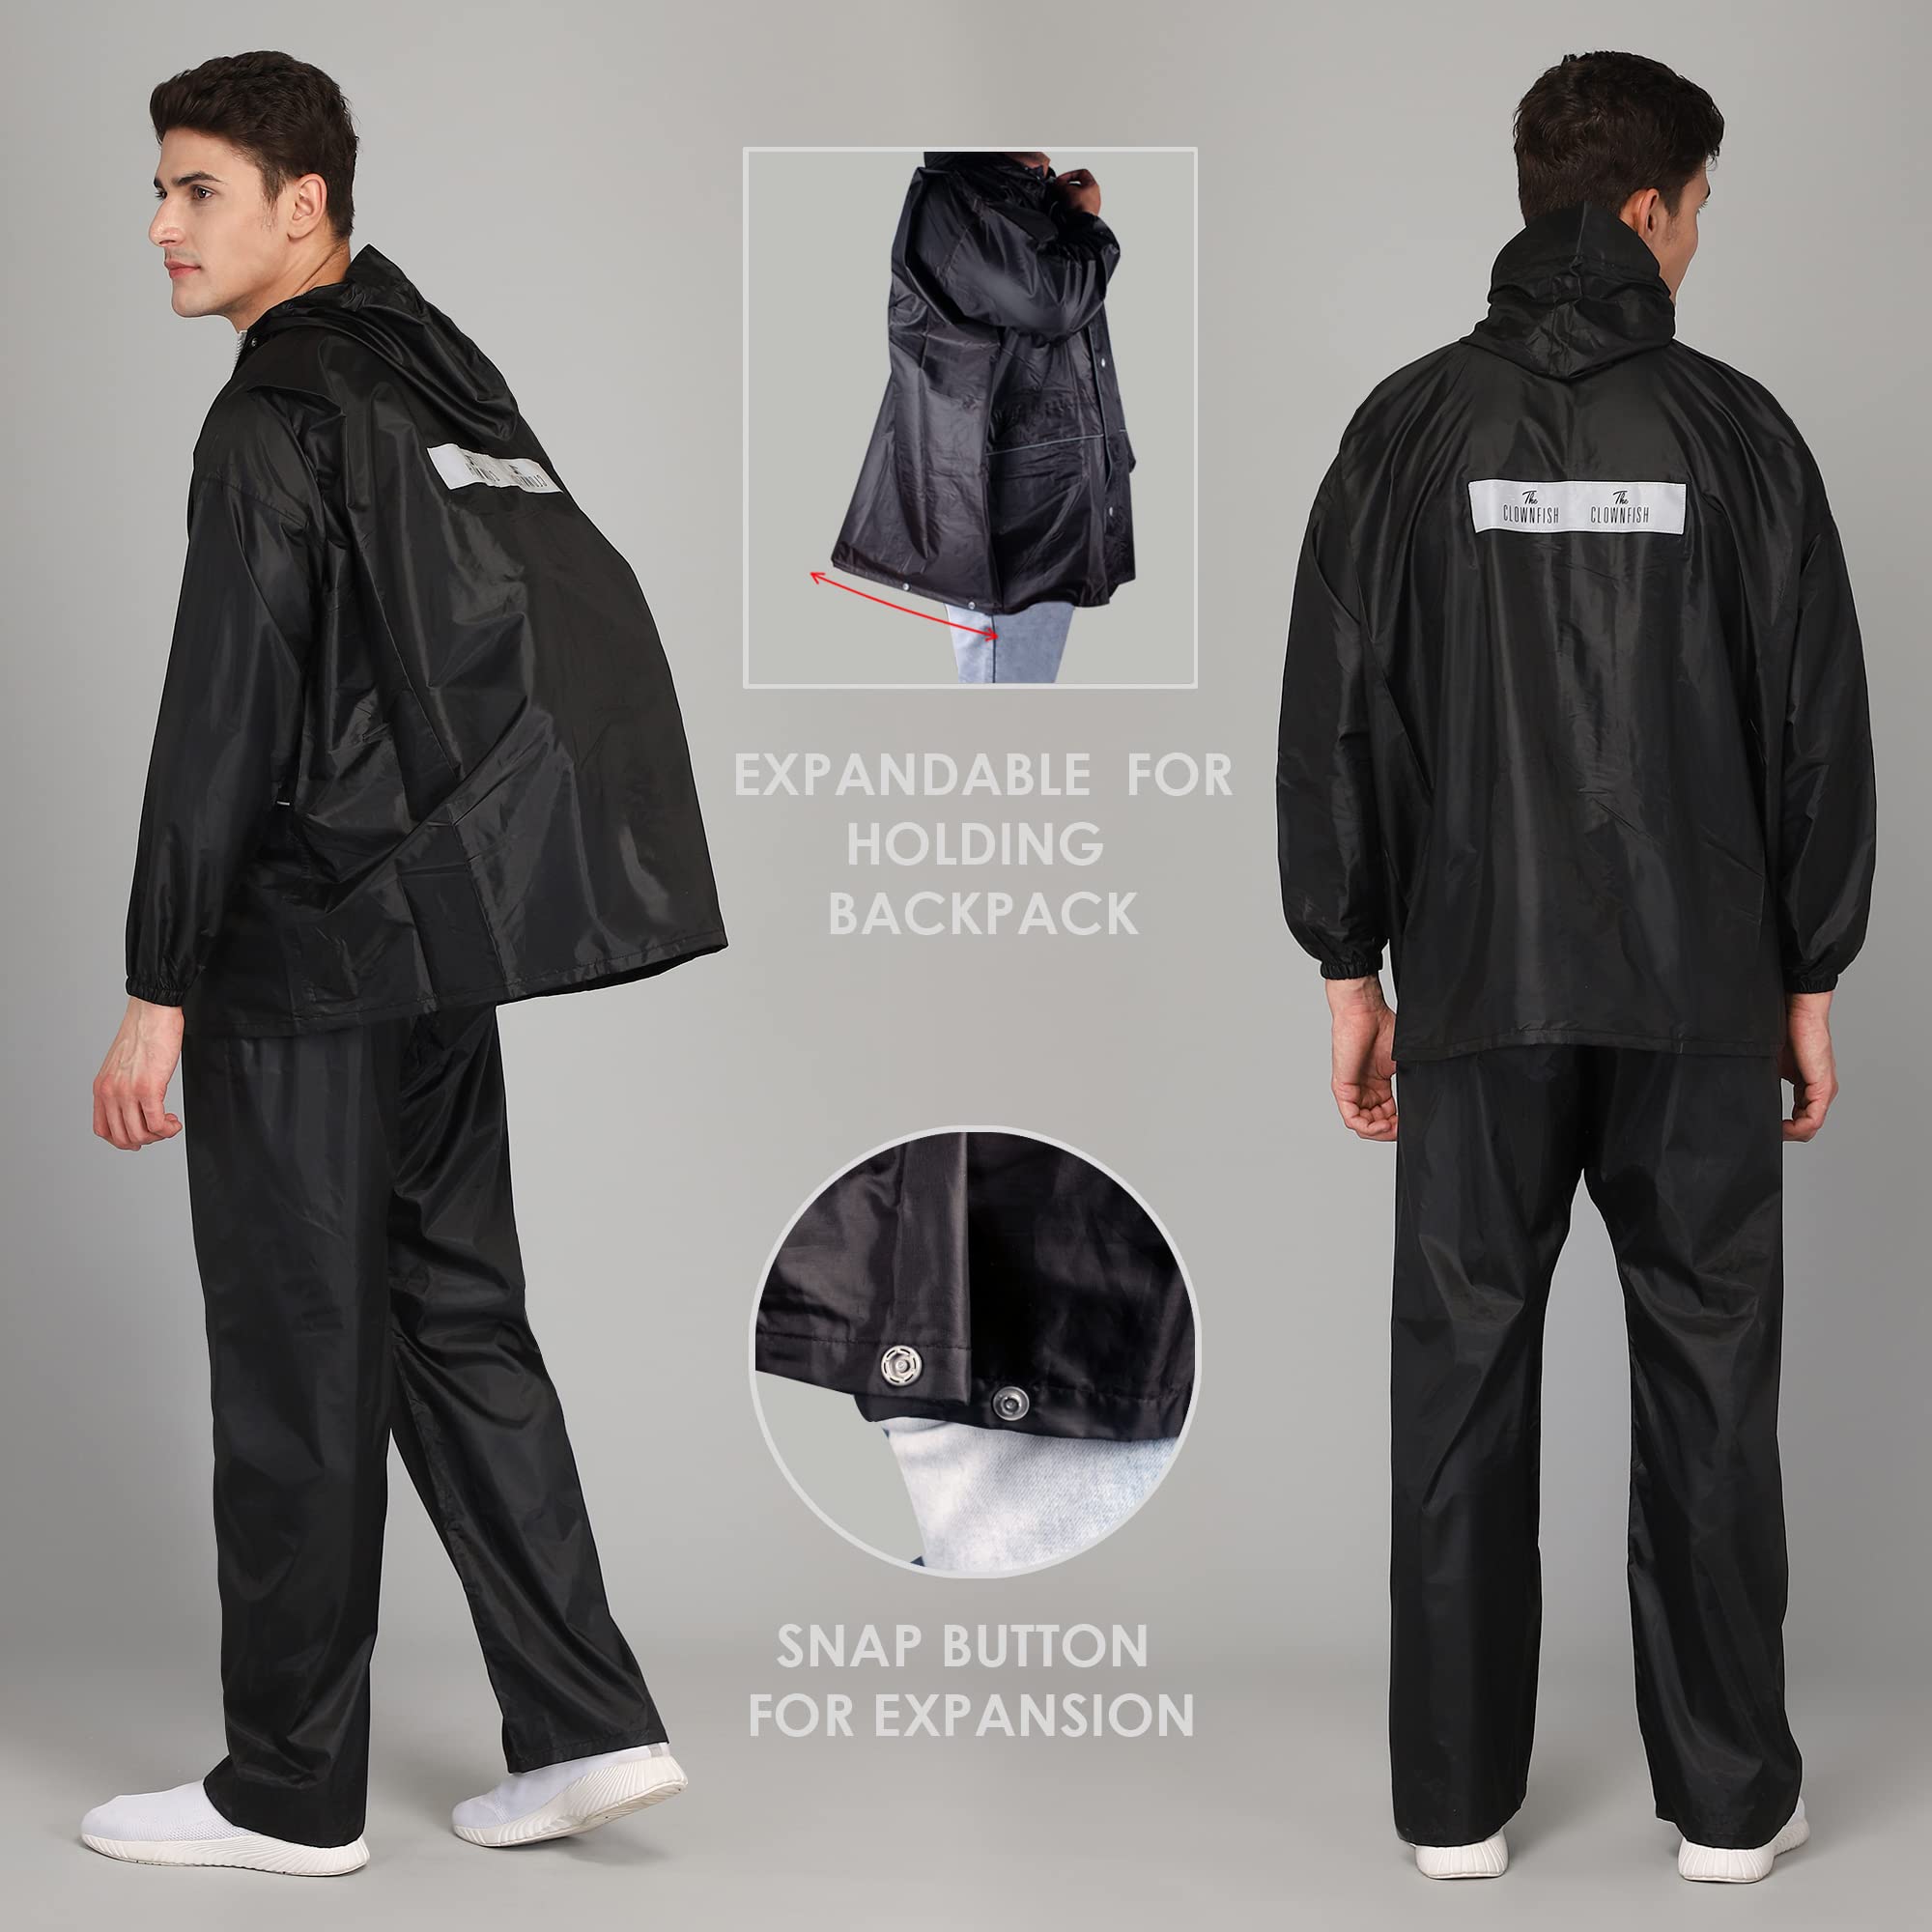 THE CLOWNFISH Men's A-Line Coat Jacket Charles Black XL